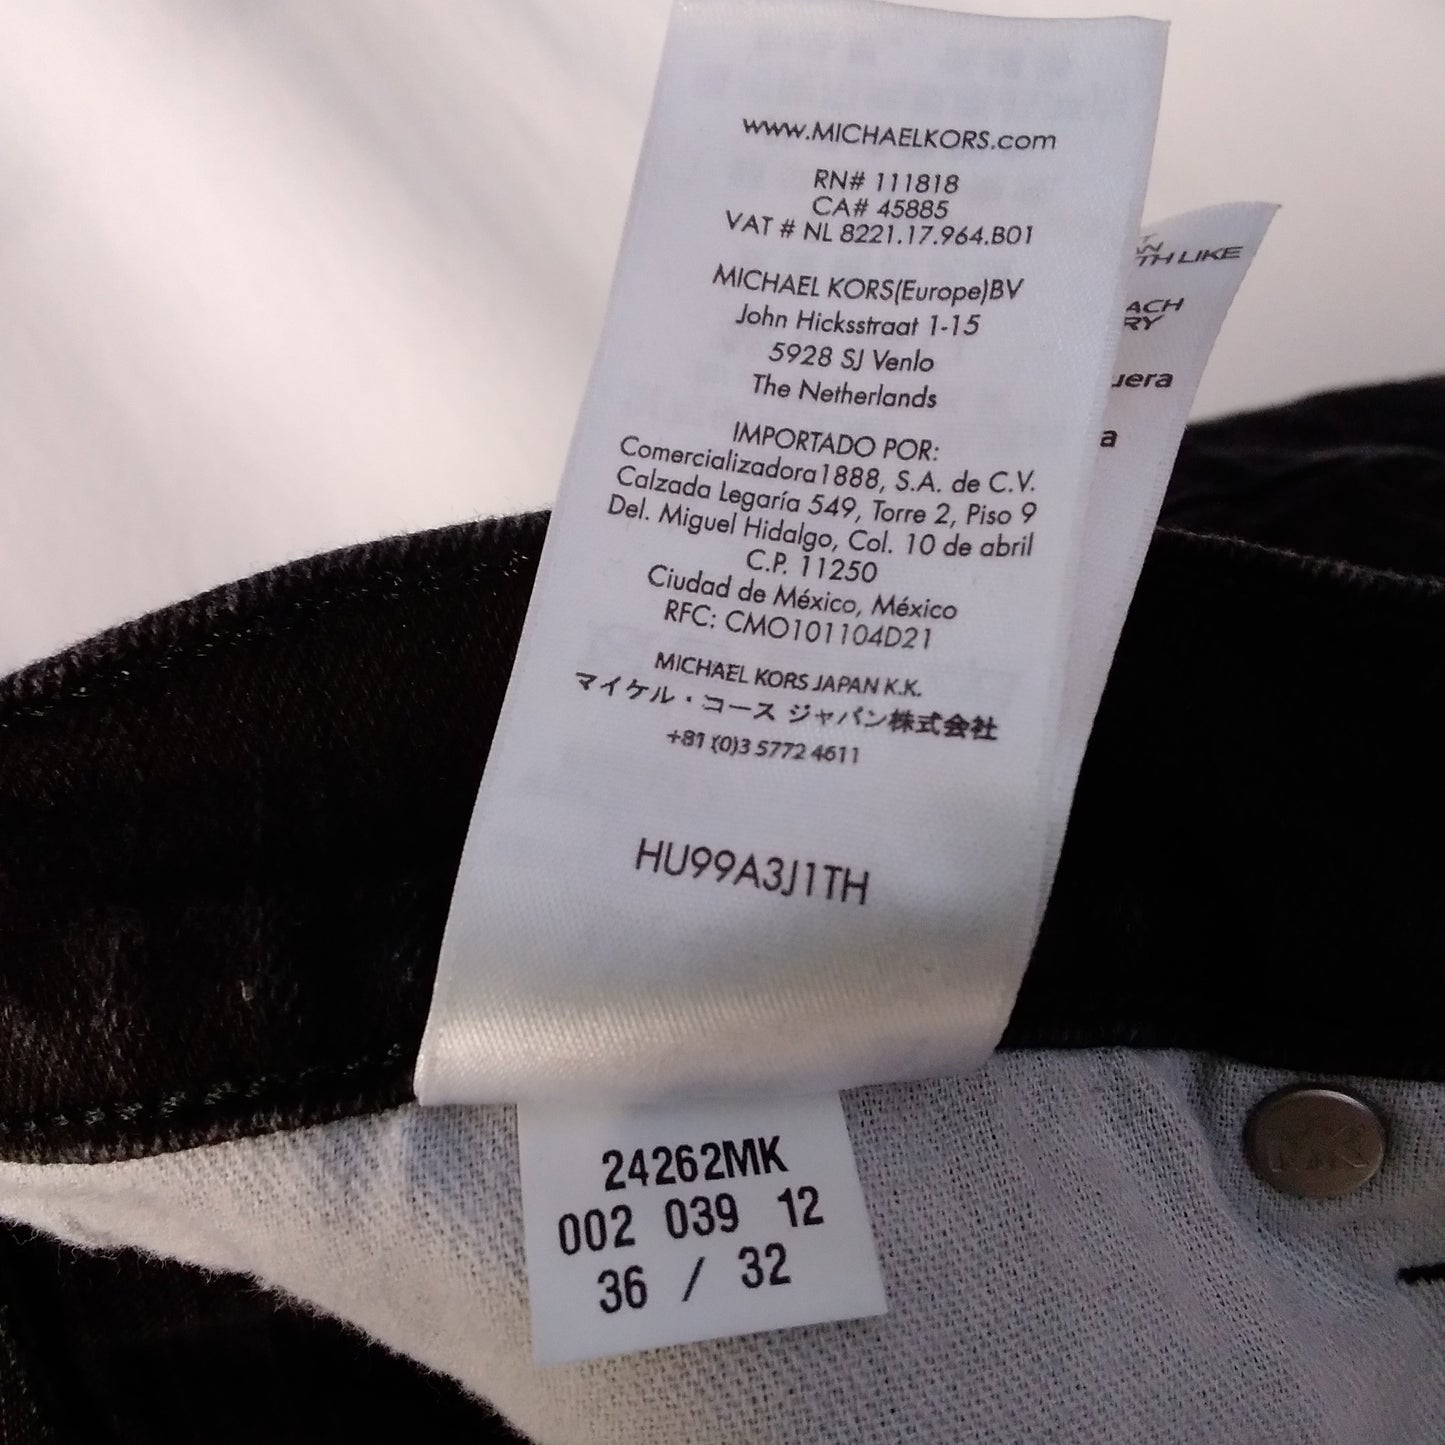 Michael Kors Black Grant Classic Fit Jeans - 36x32